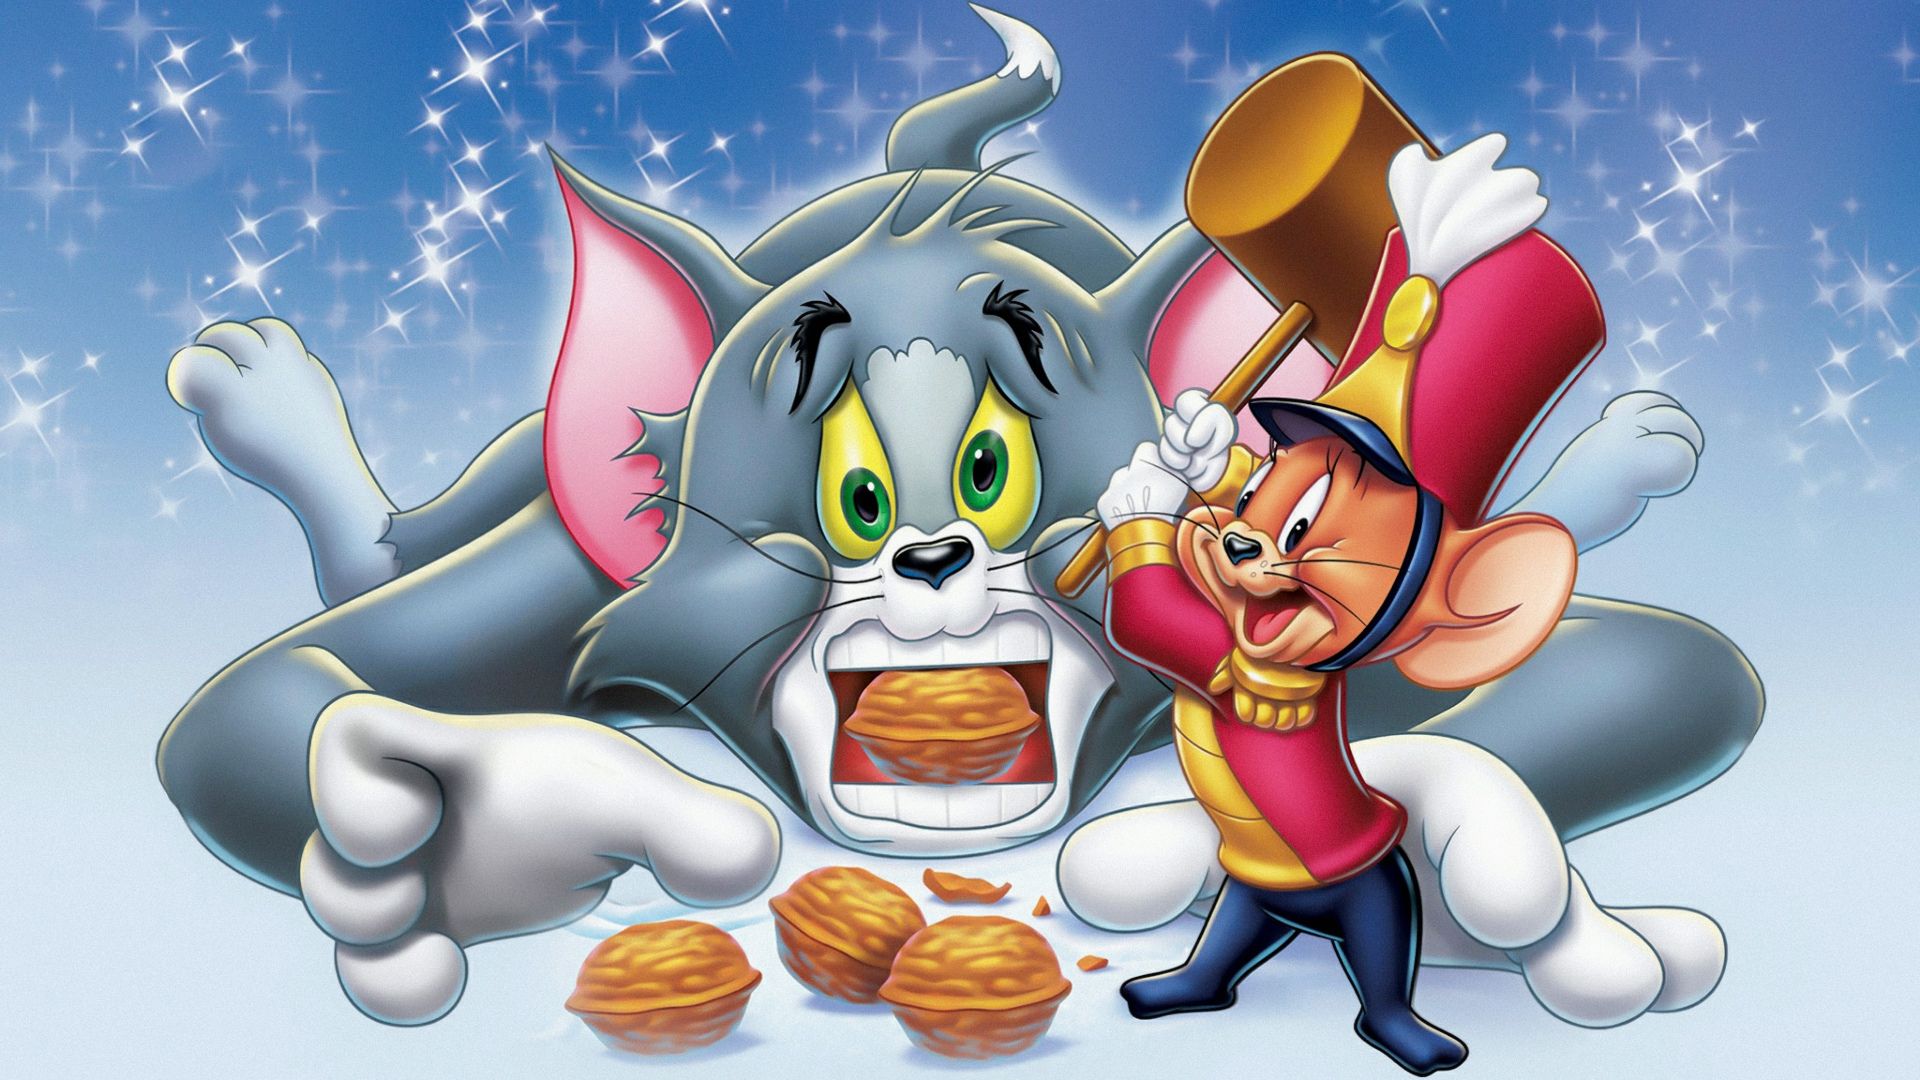 Tom and Jerry: A Nutcracker Tale background